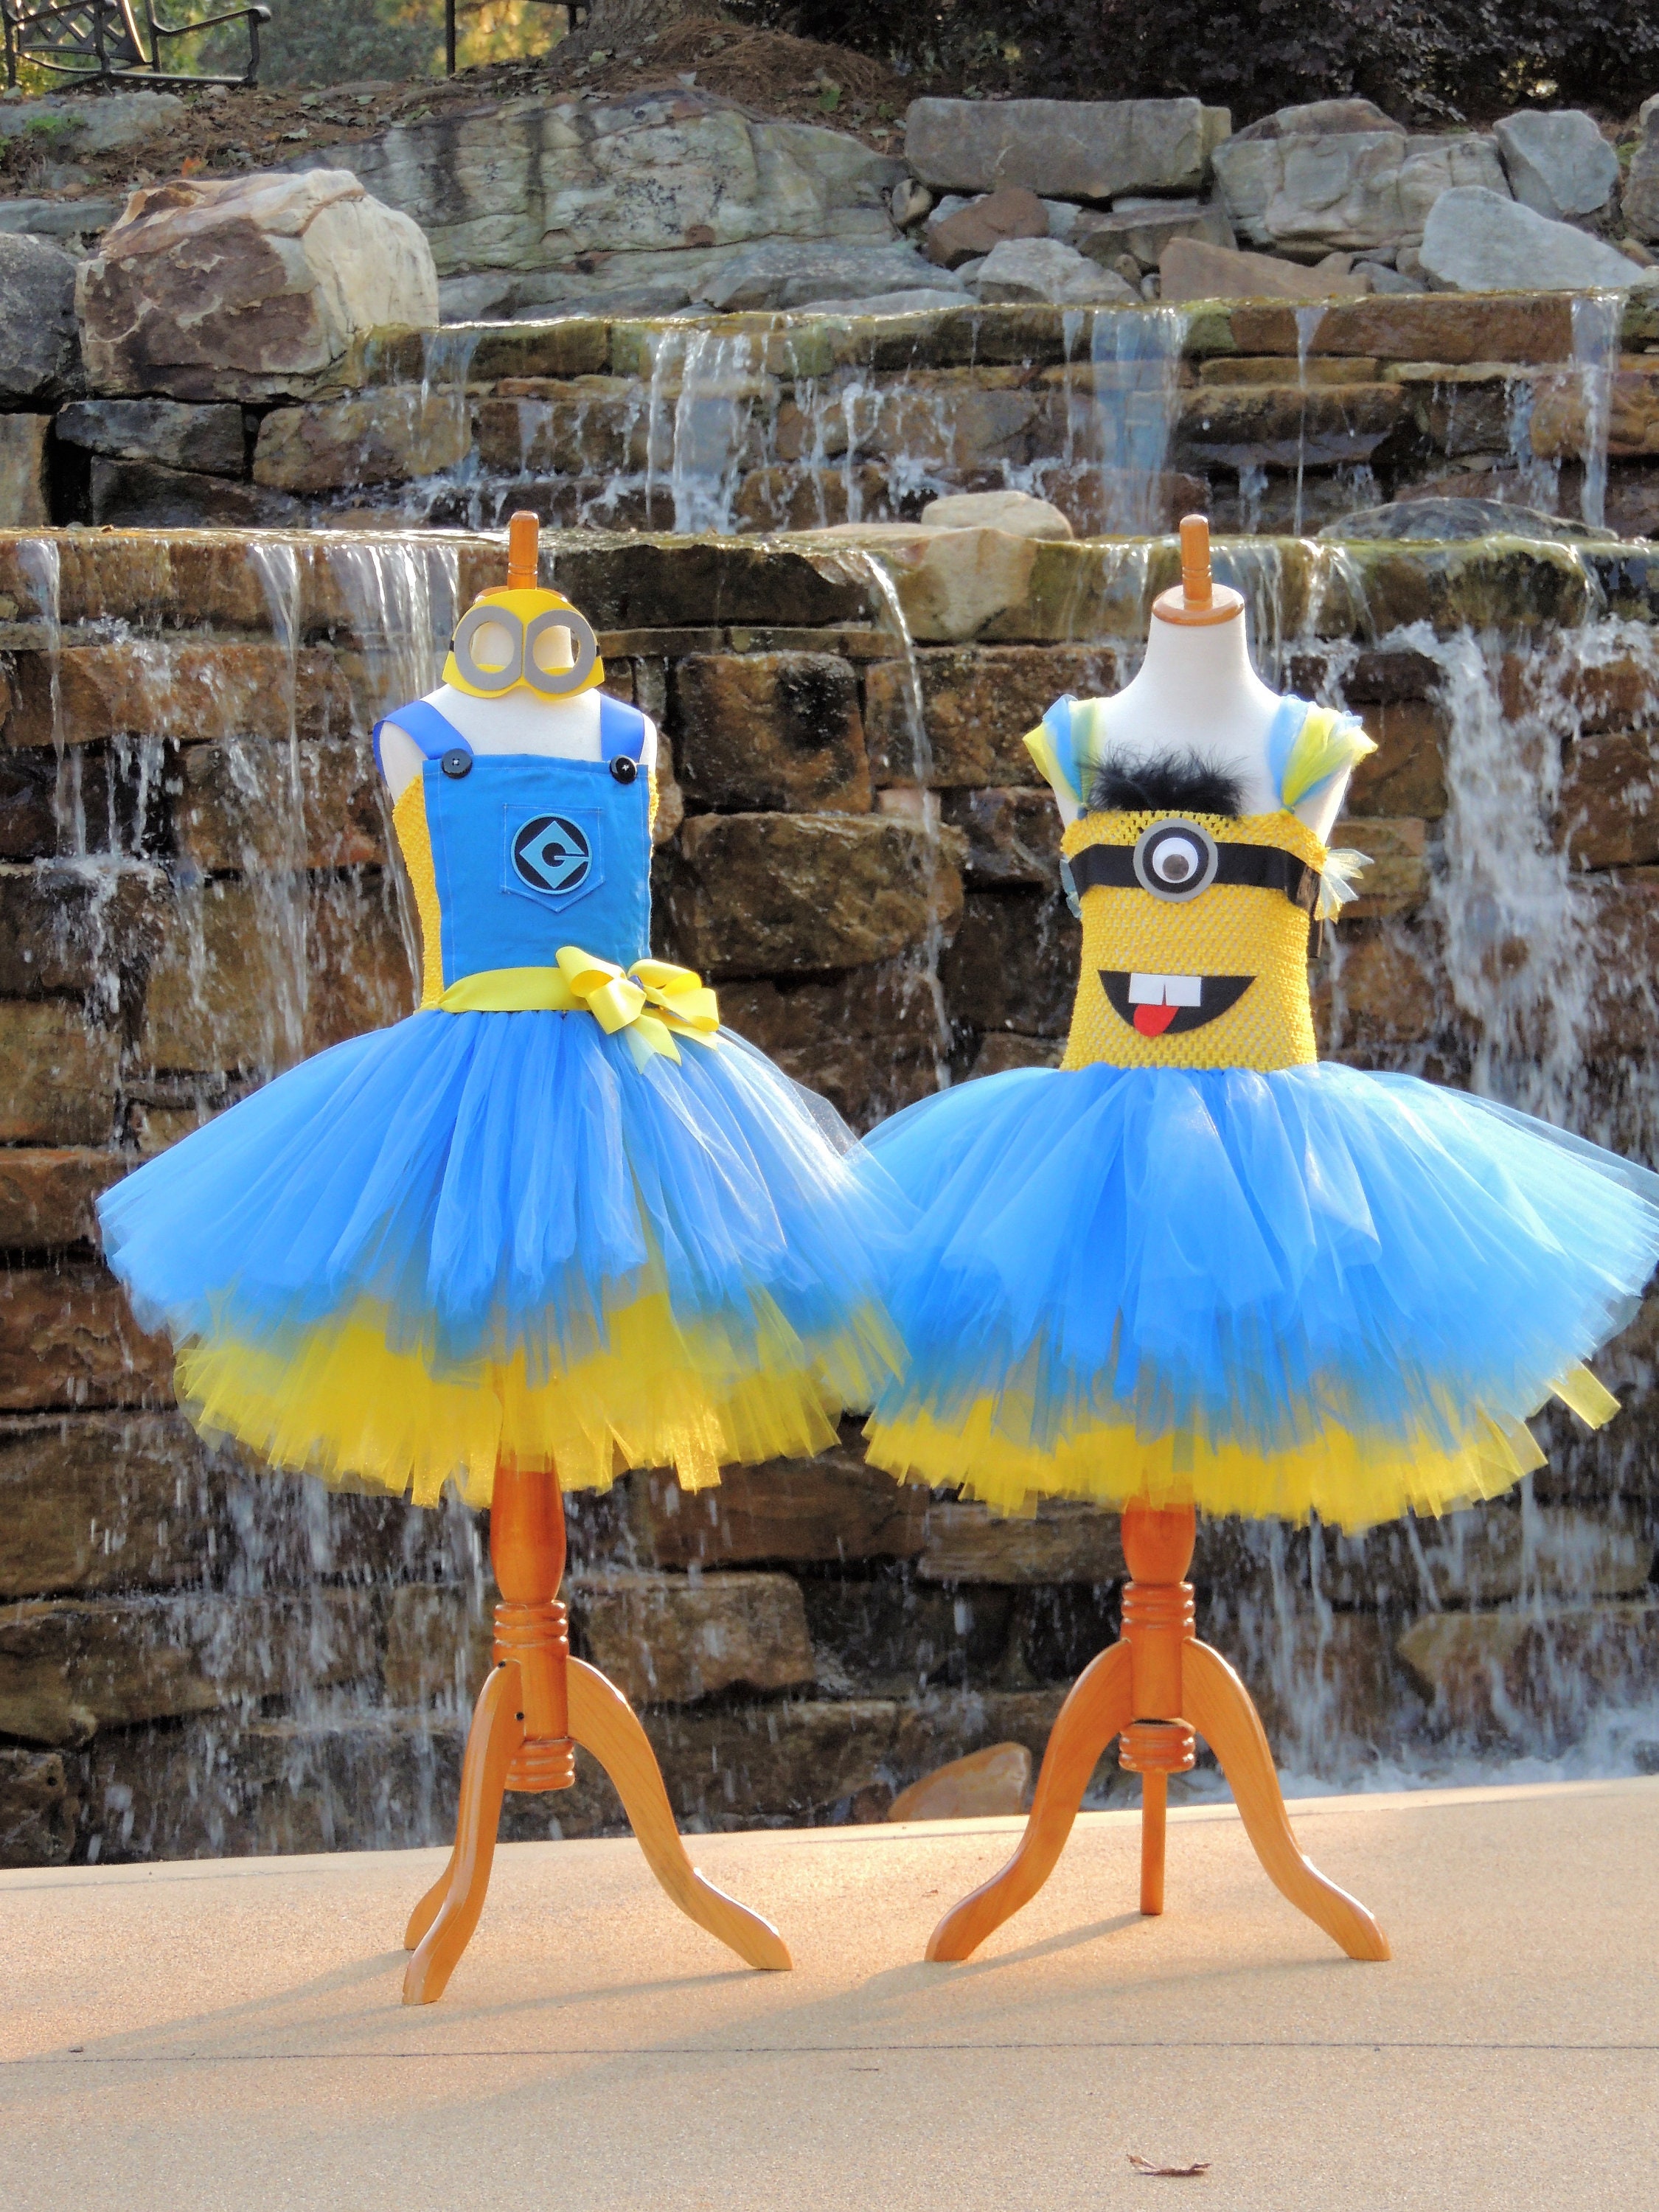 Girls Lil Minions Inspired Tutu Costume Dress